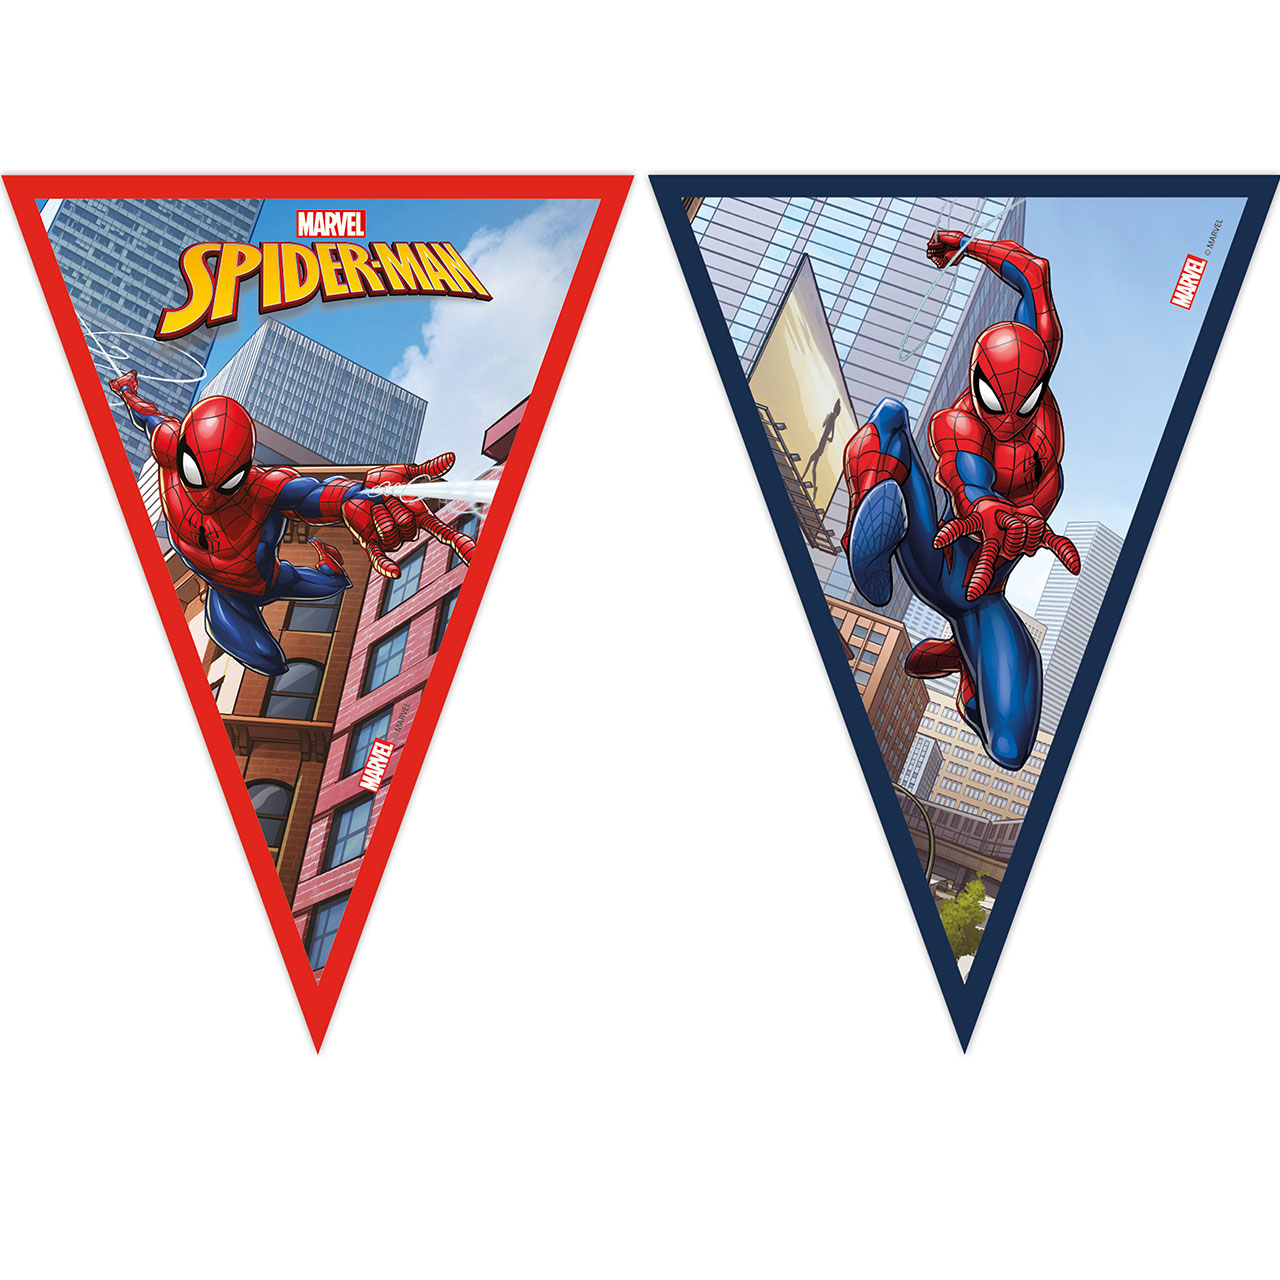 Spiderman Crime Fighter Flag Banner